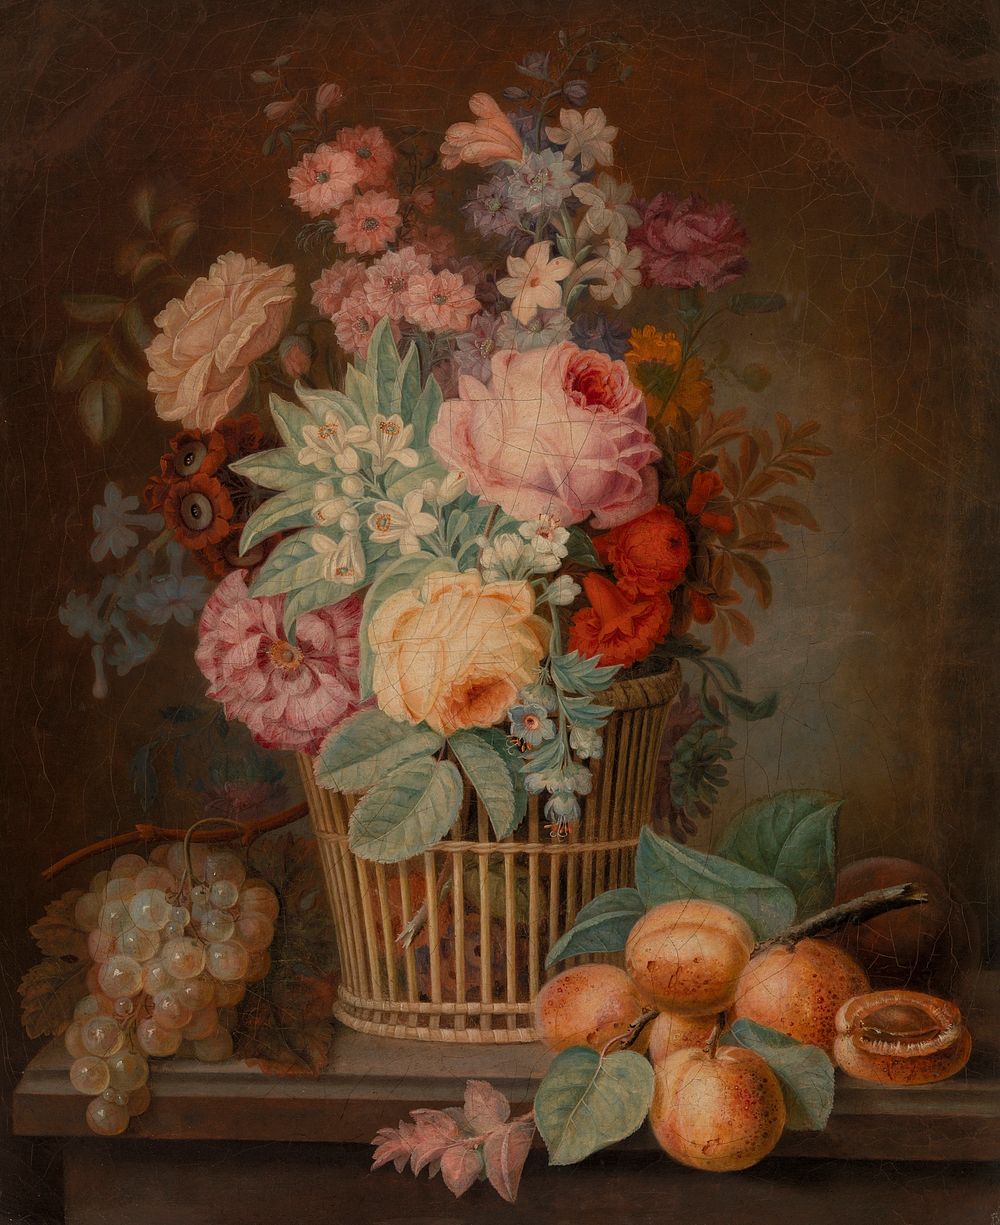 Flower Piece in Basket by Unidentified artist